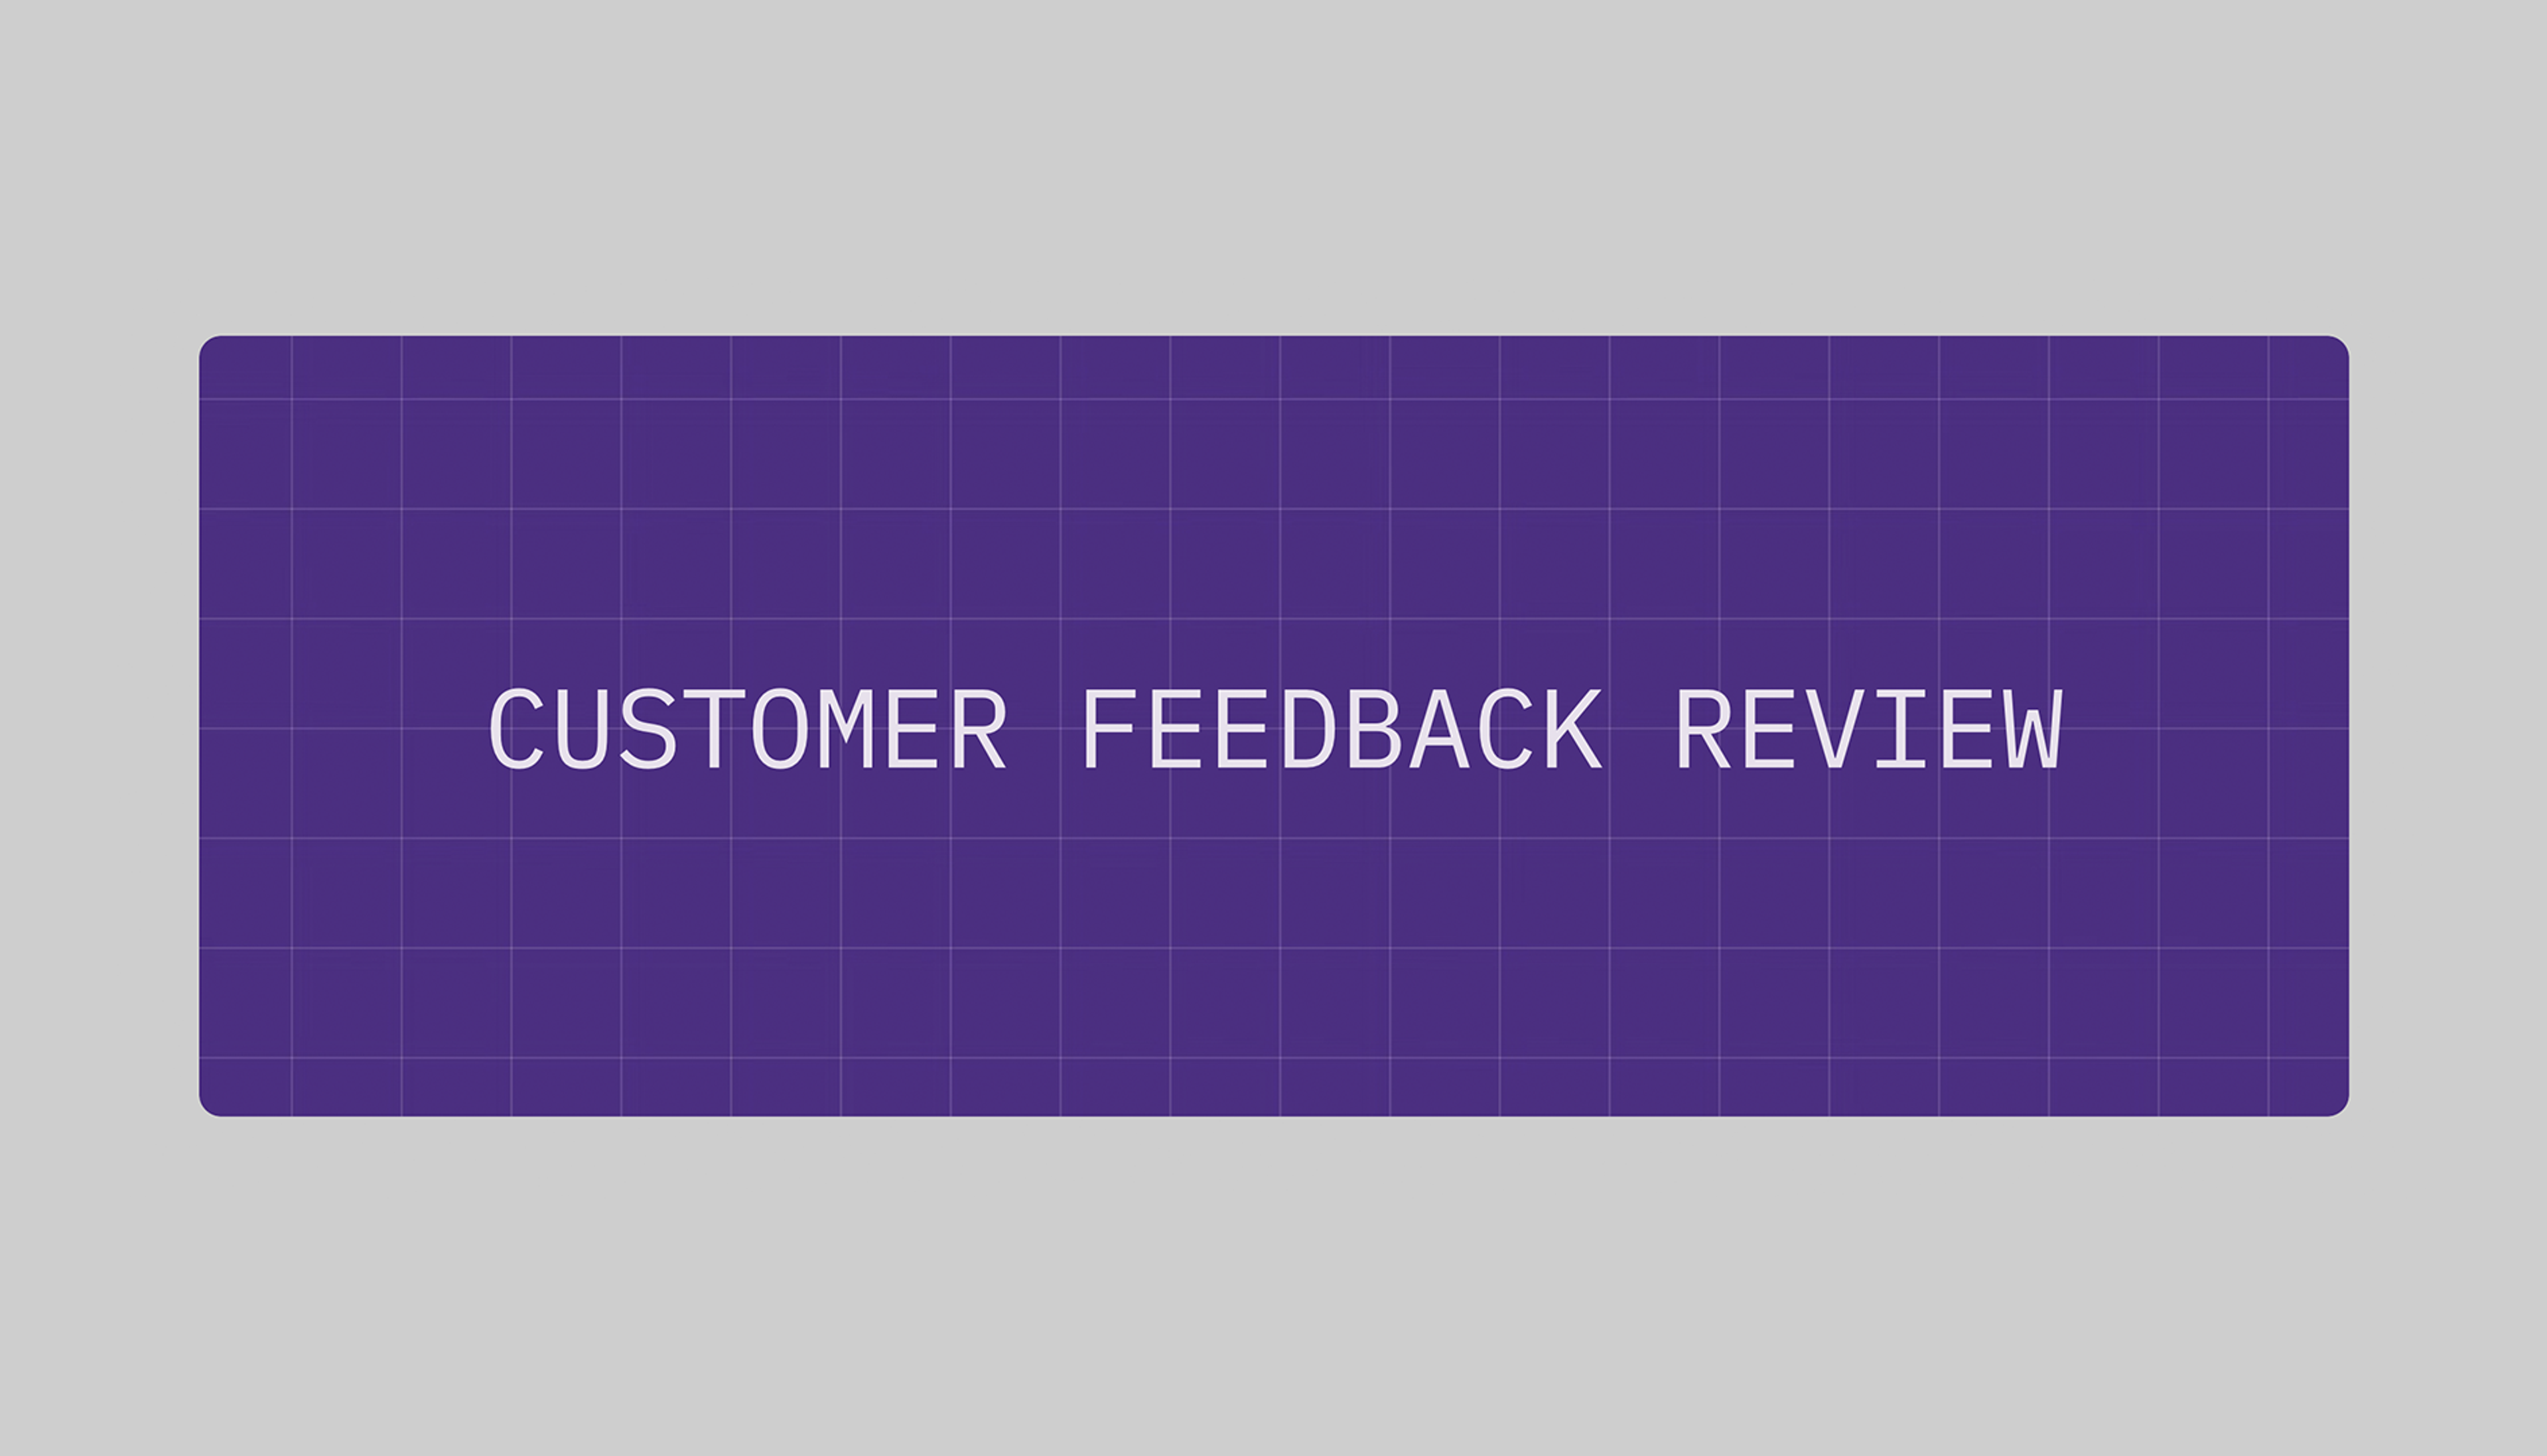 Customer Feedback Review - Intro